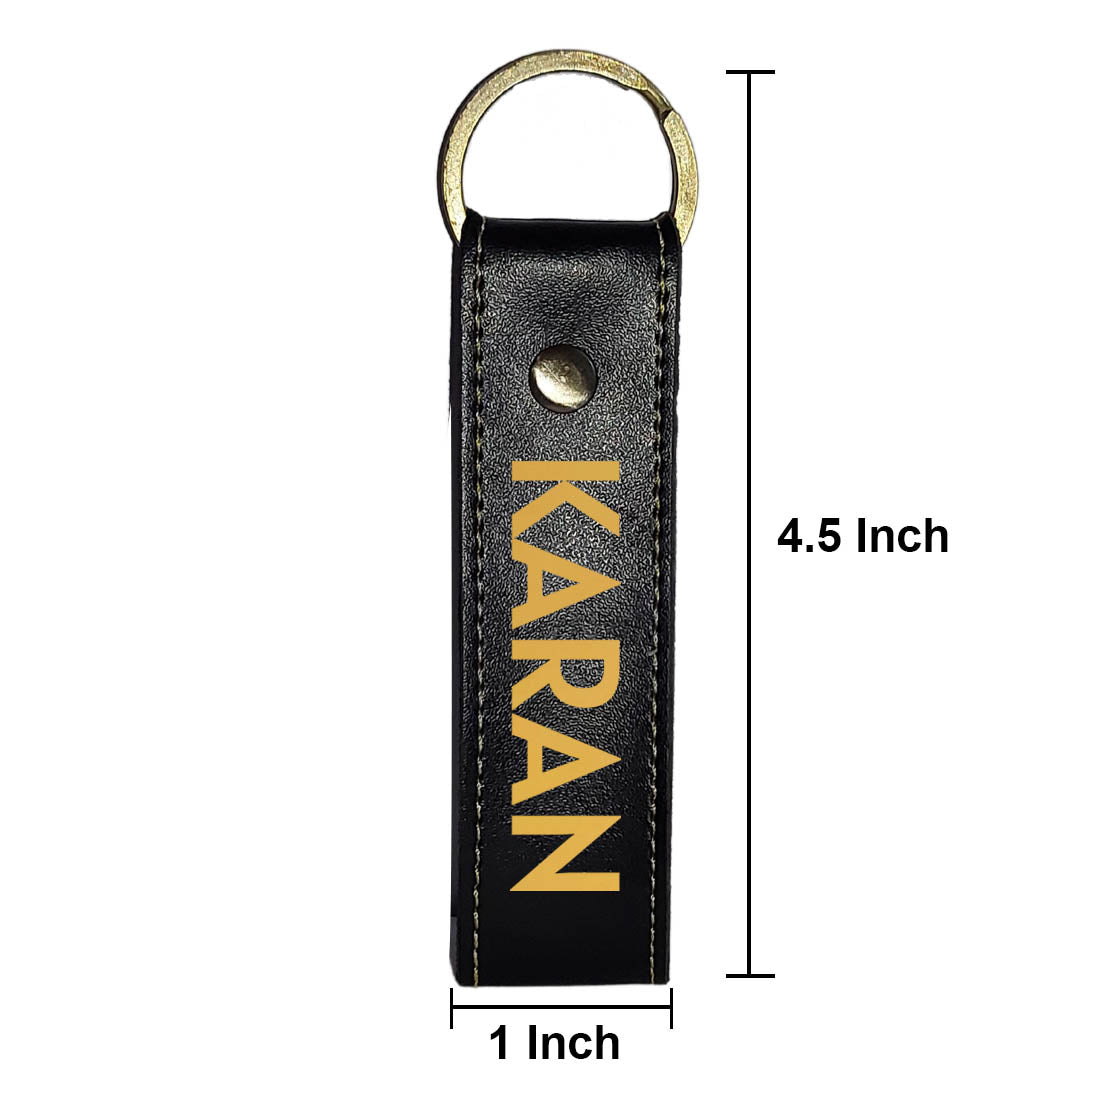 Personalized Keychain PU Leather for Car Bike Home Keys - Add Name